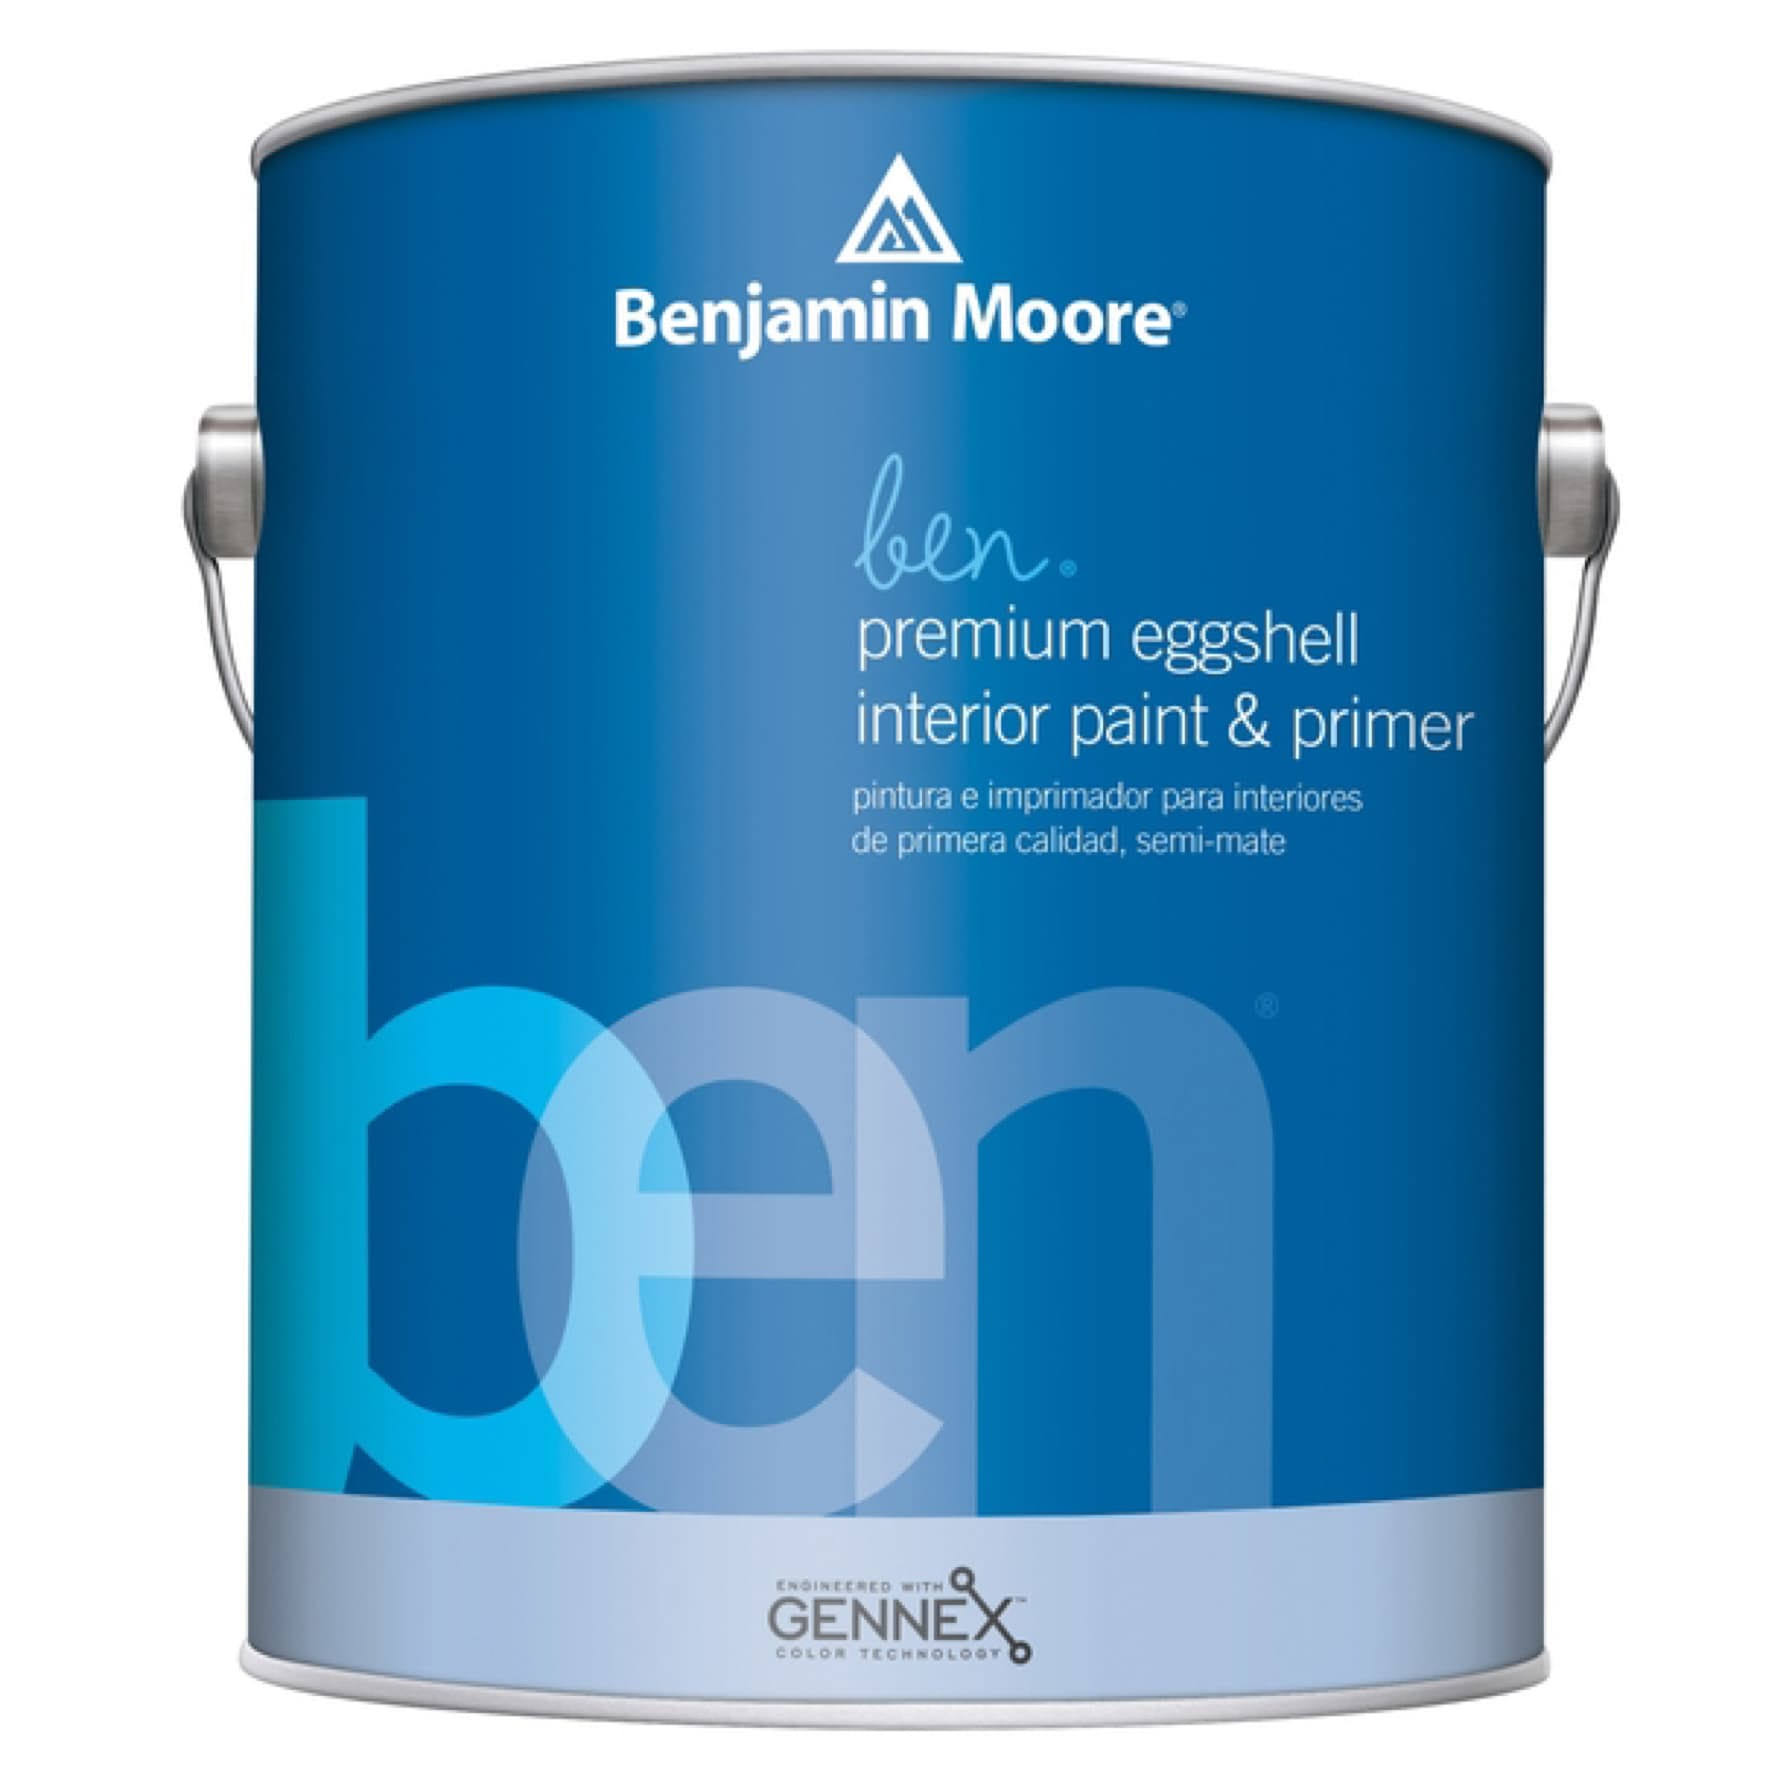 Benjamin Moore - Ben Interior Paint - Eggshell (N626) - Gallon / Color Code